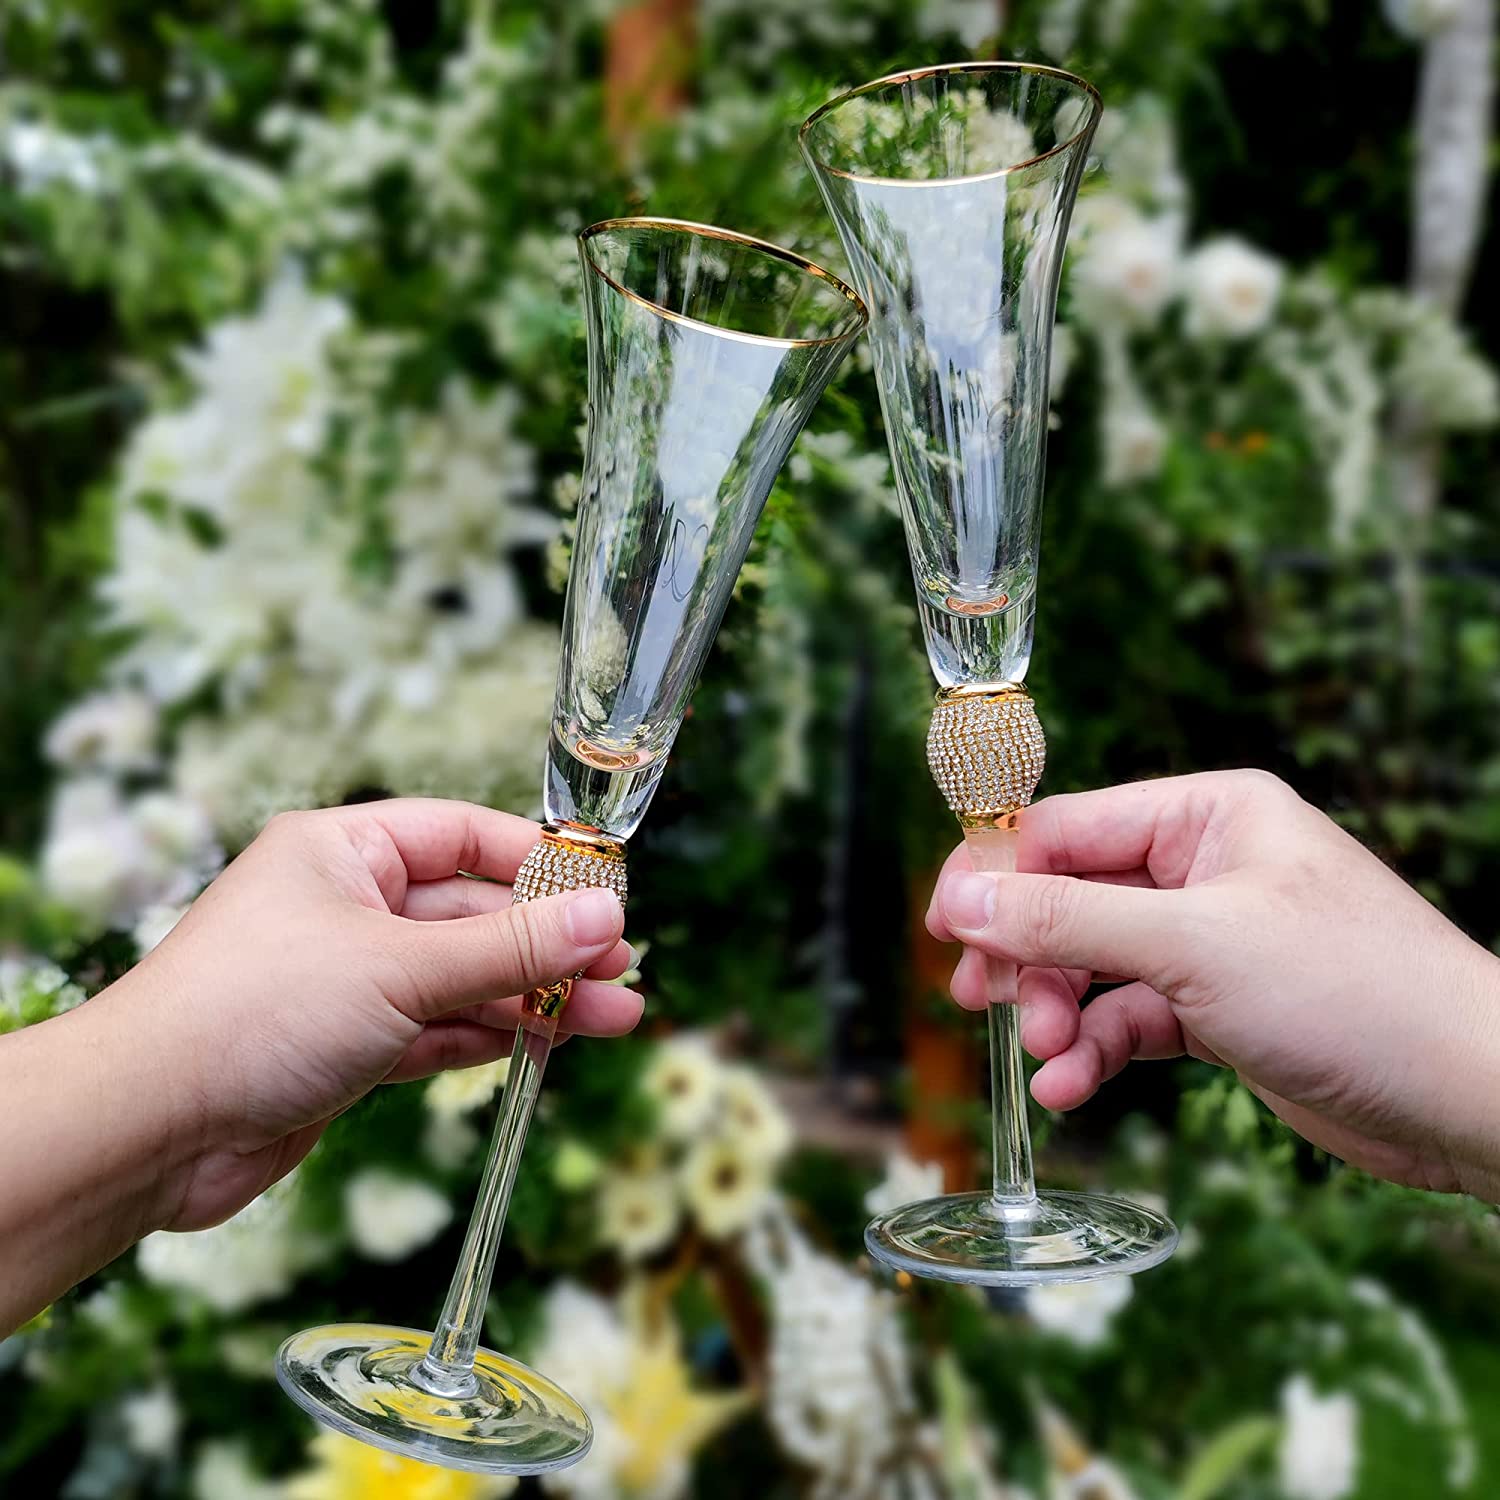 2-Piece Wedding Crystal Champagne Glass Set Flute Glasses Wine Glass for  Wedding Gift Glasses Gold